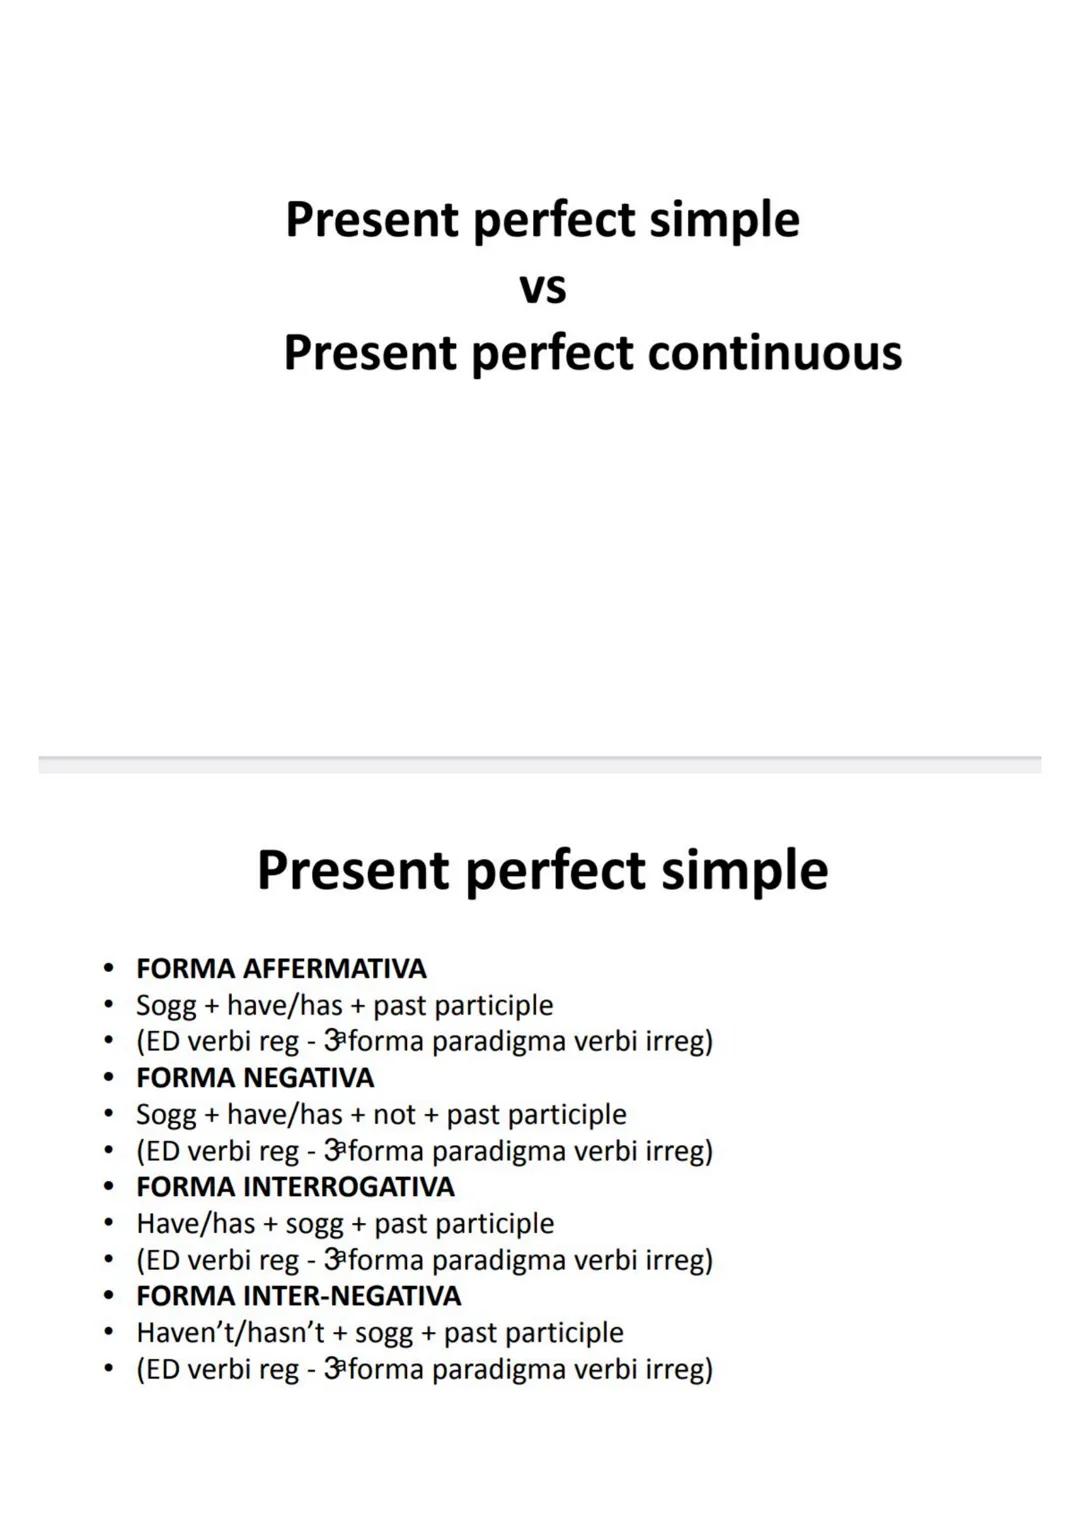 <h2 id="presentperfectsimplevspresentperfectcontinuous">Present Perfect Simple vs. Present Perfect Continuous</h2>
<h3 id="presentperfectsim